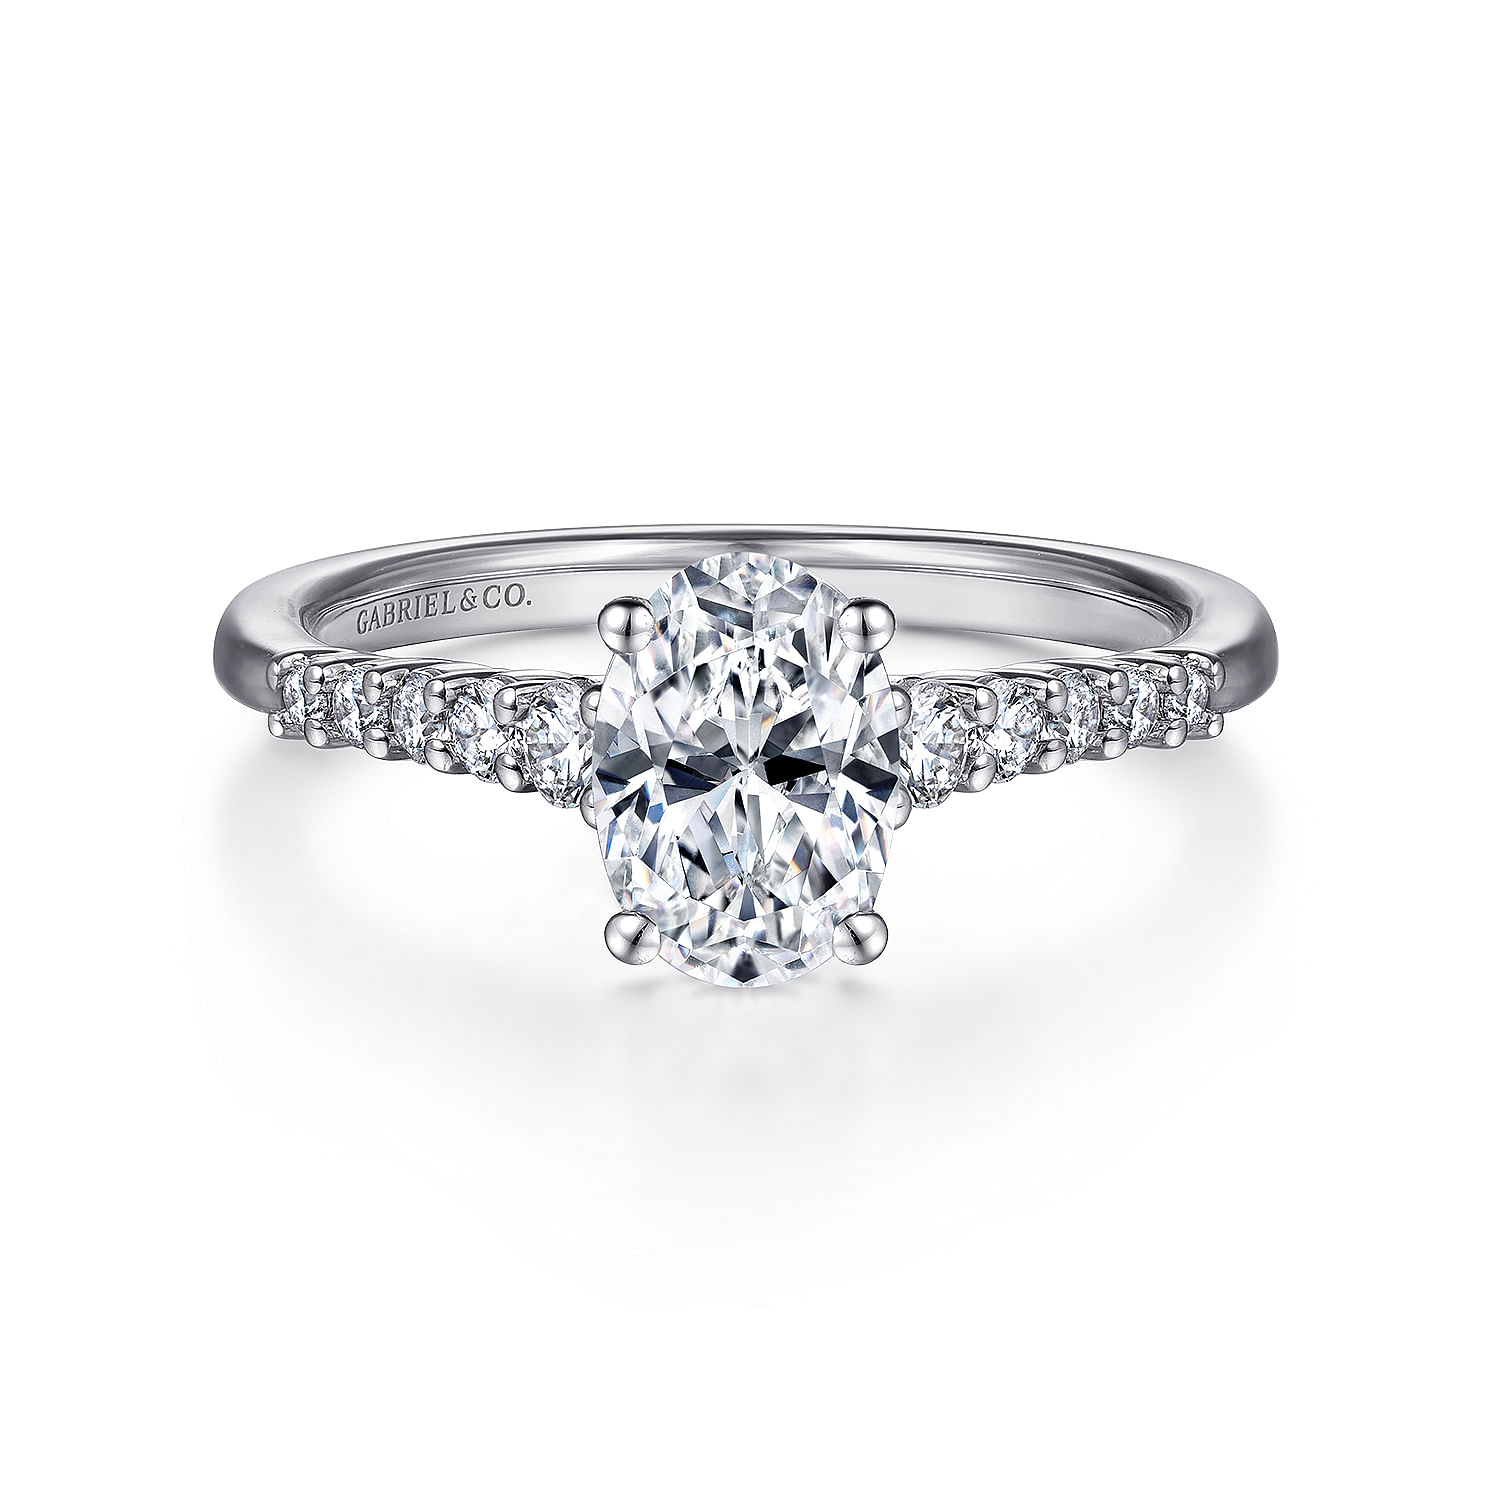 High Quality Oval Diamond Engagement Ring Wedding Band Fashion Jewellery Surrey Langley Canada